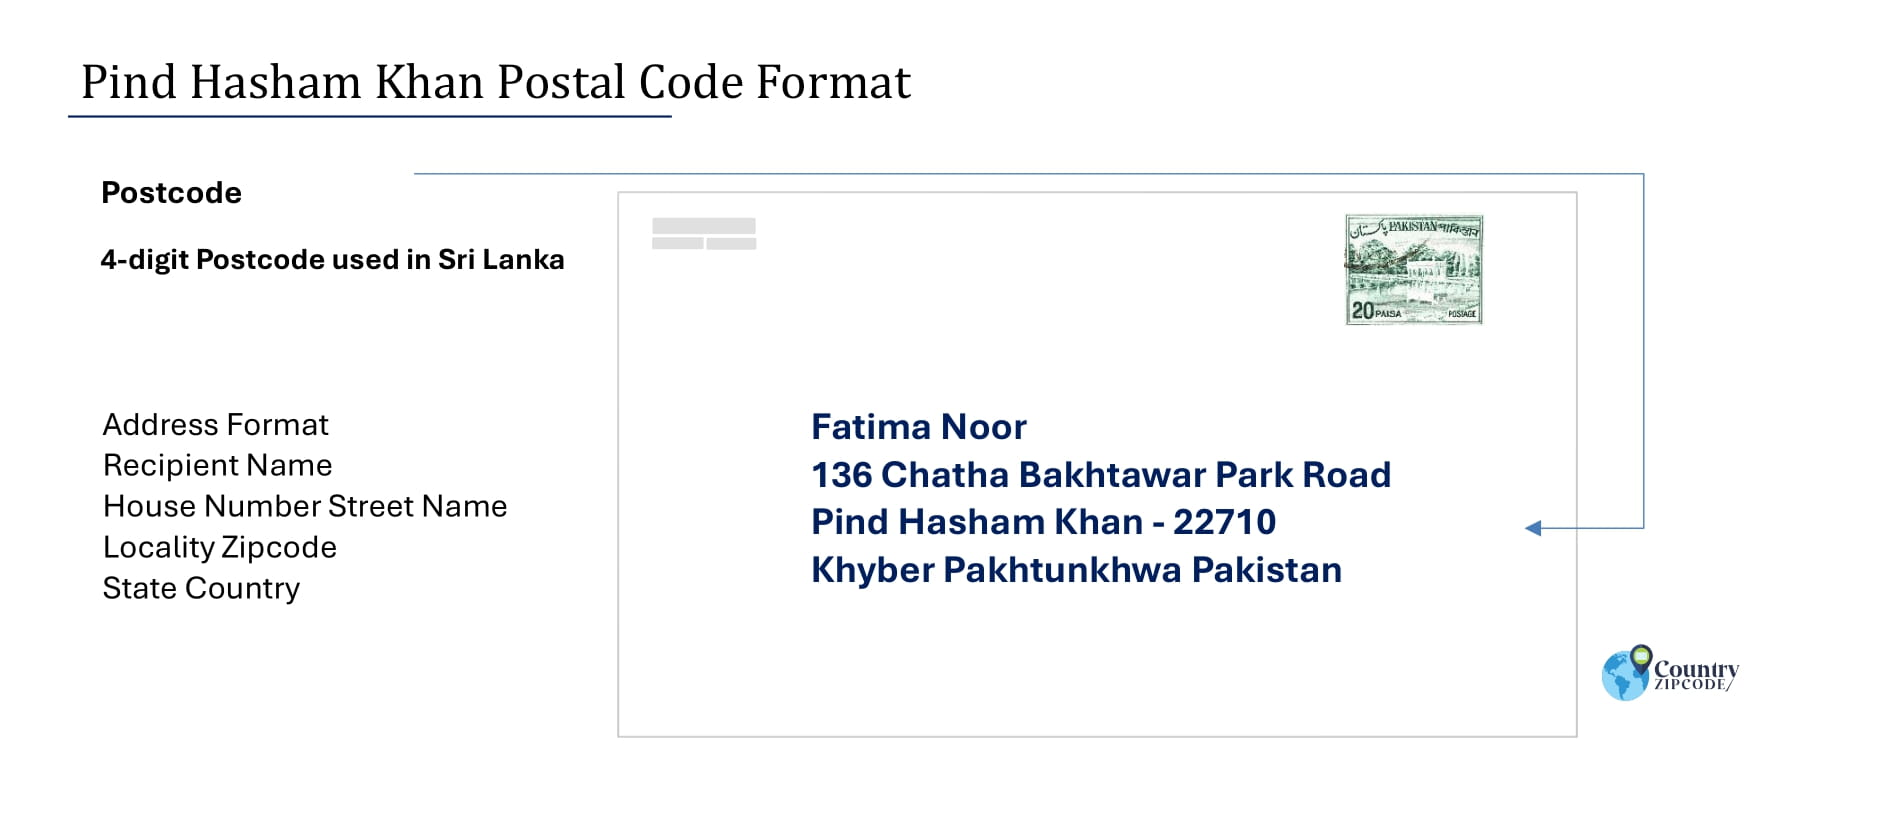 Example of Pind Hasham Khan Pakistan Postal code and Address format